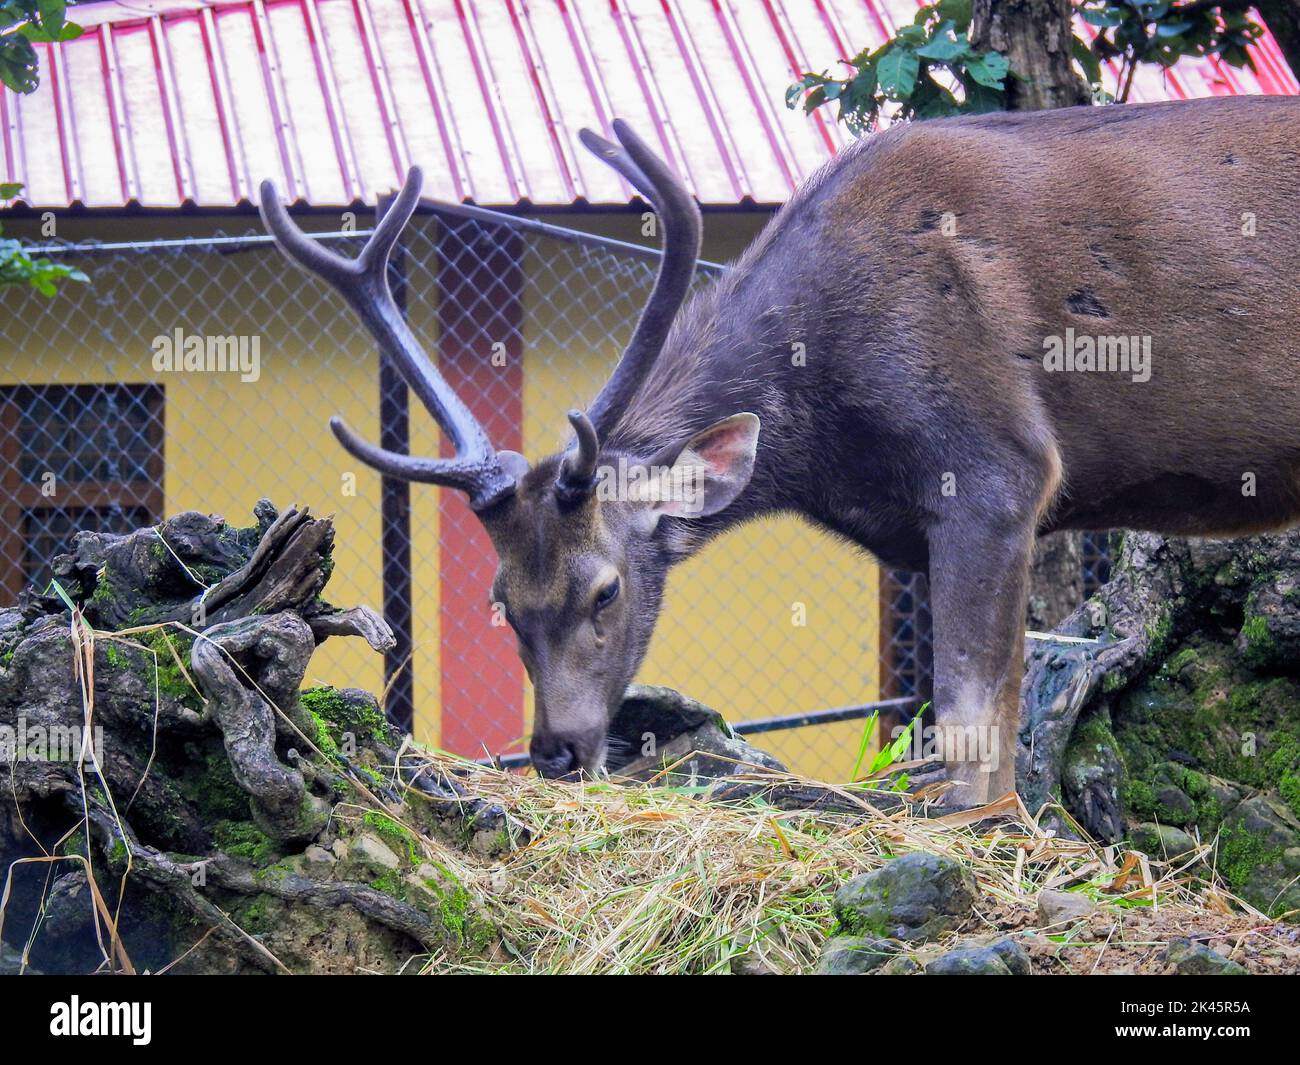 August 18th 2018, dehradun City Uttarakhand India. Sambar deer (Rusa unicolor) in captivity at Malsi Dehradun City Zoo. Stock Photo